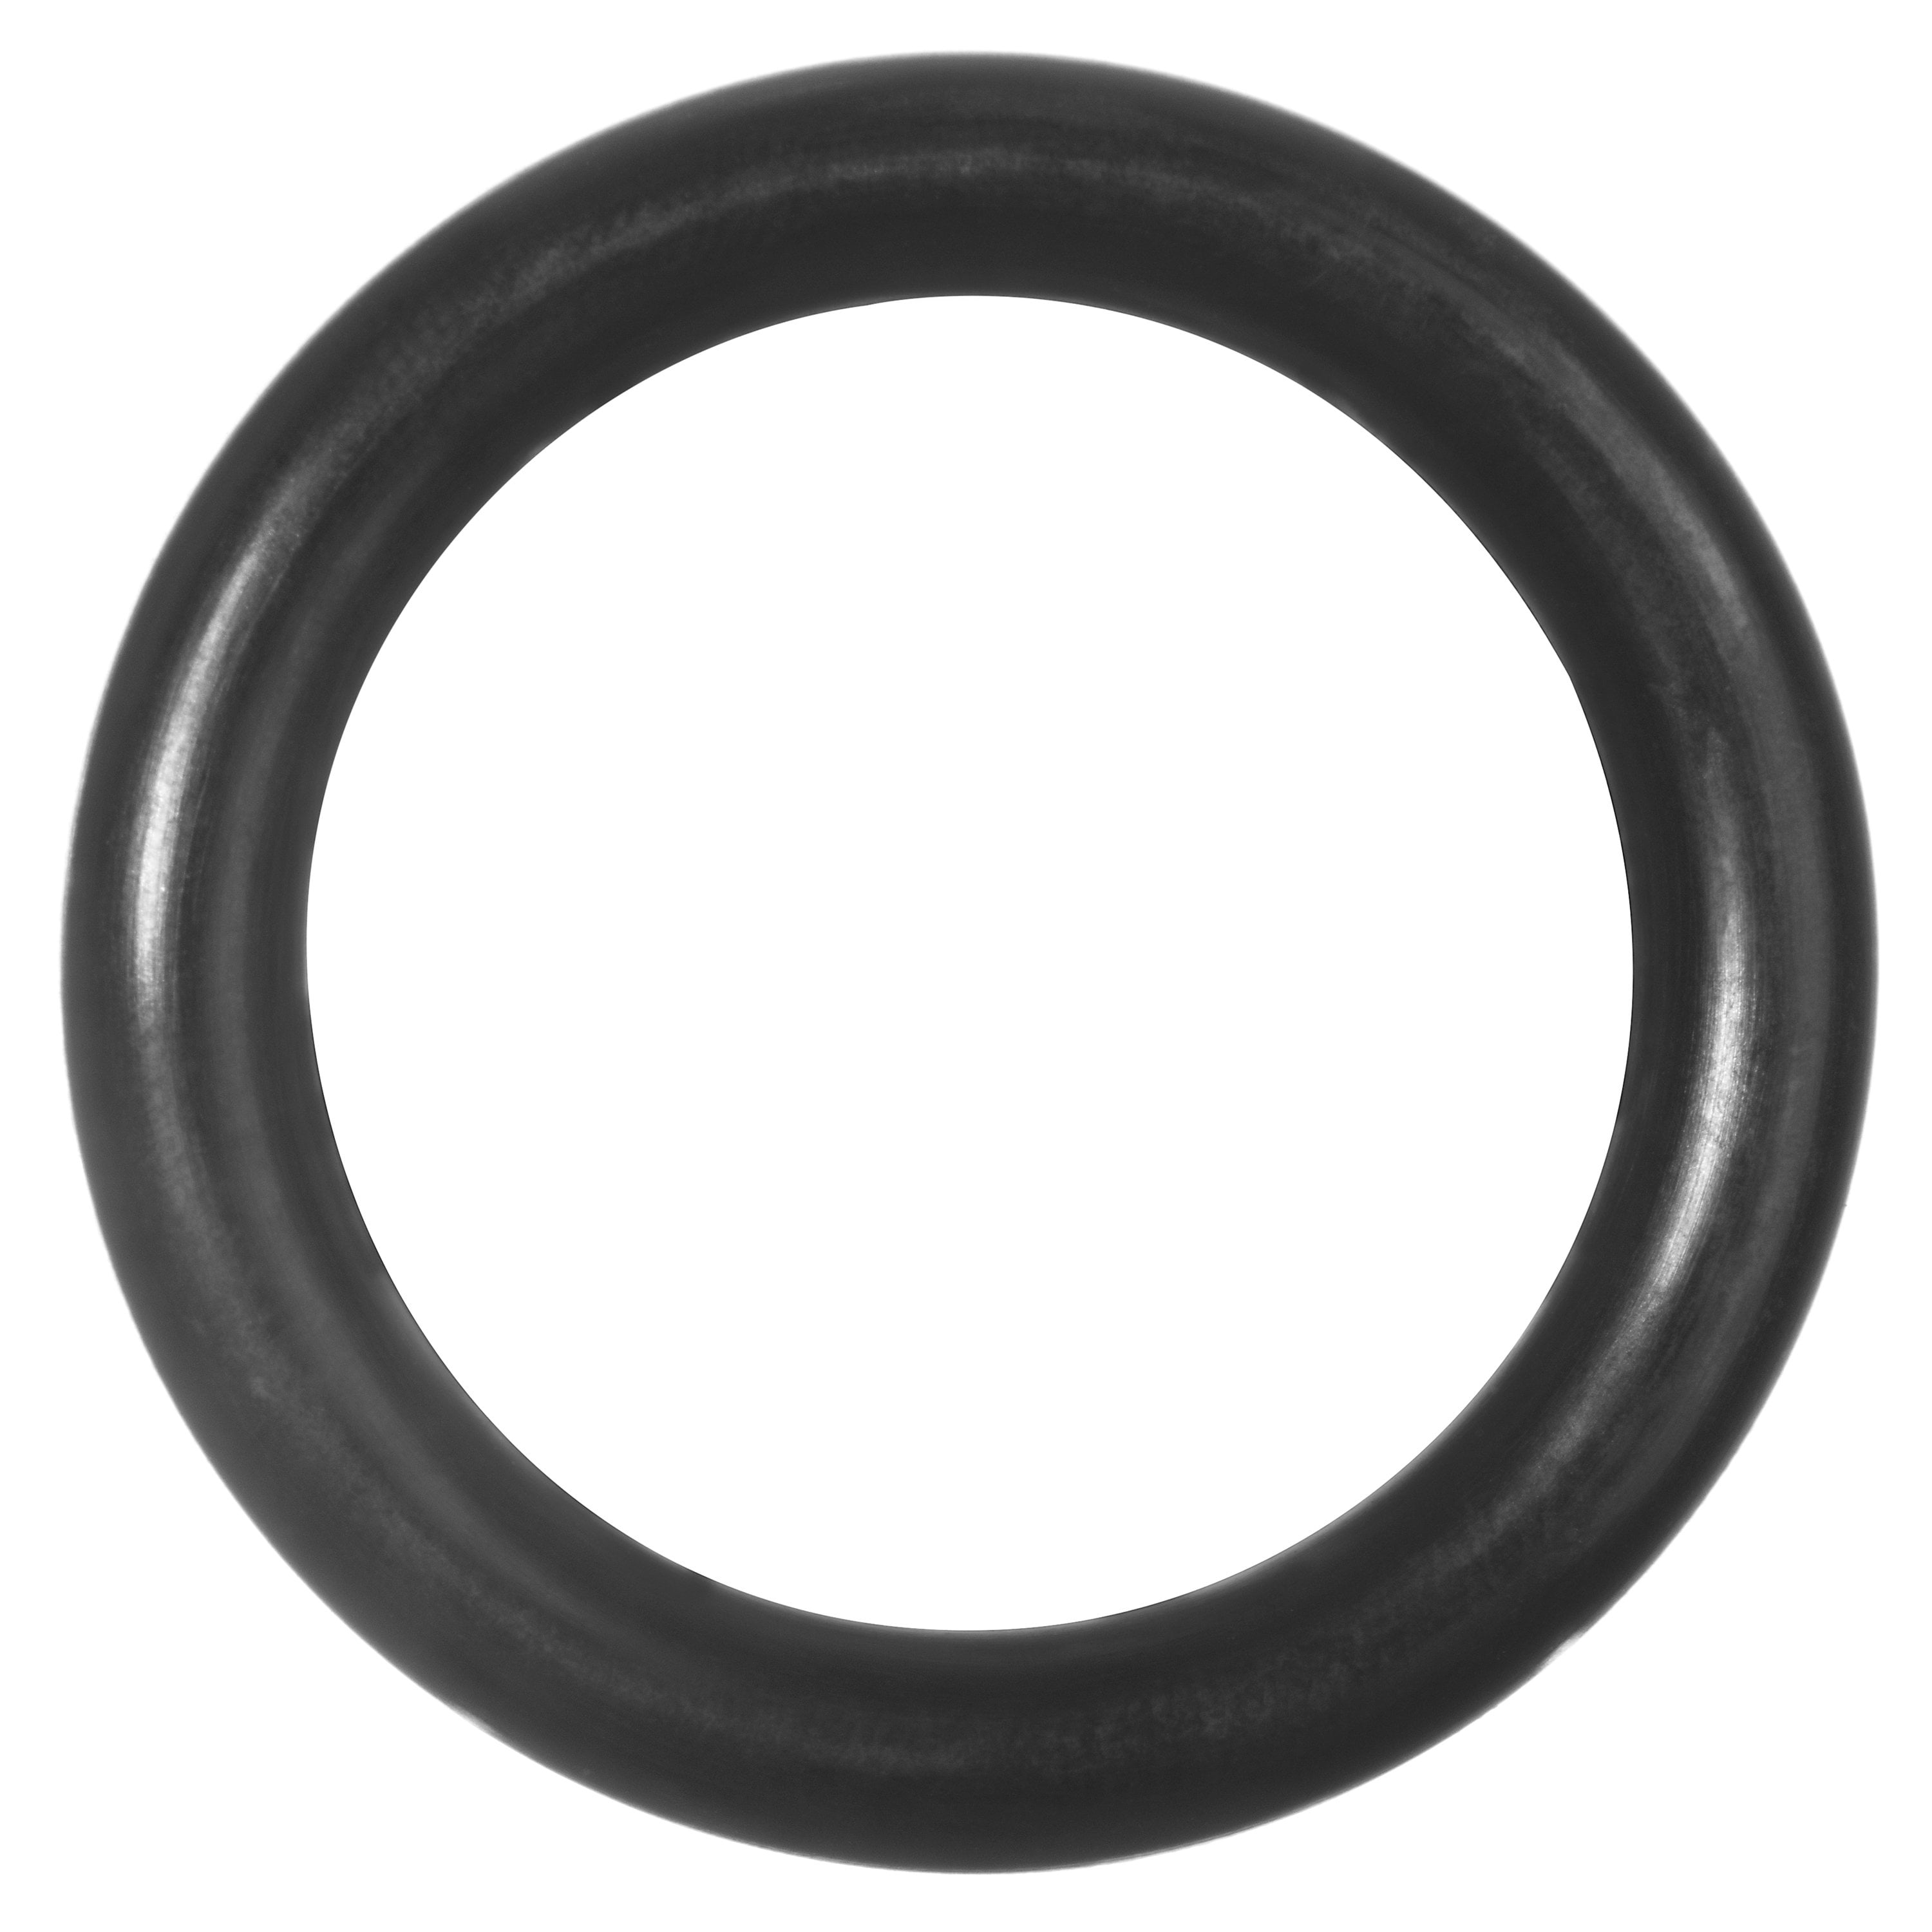 Metric Buna  O-rings 11.1 x 1.6mm Price for 25 pcs 